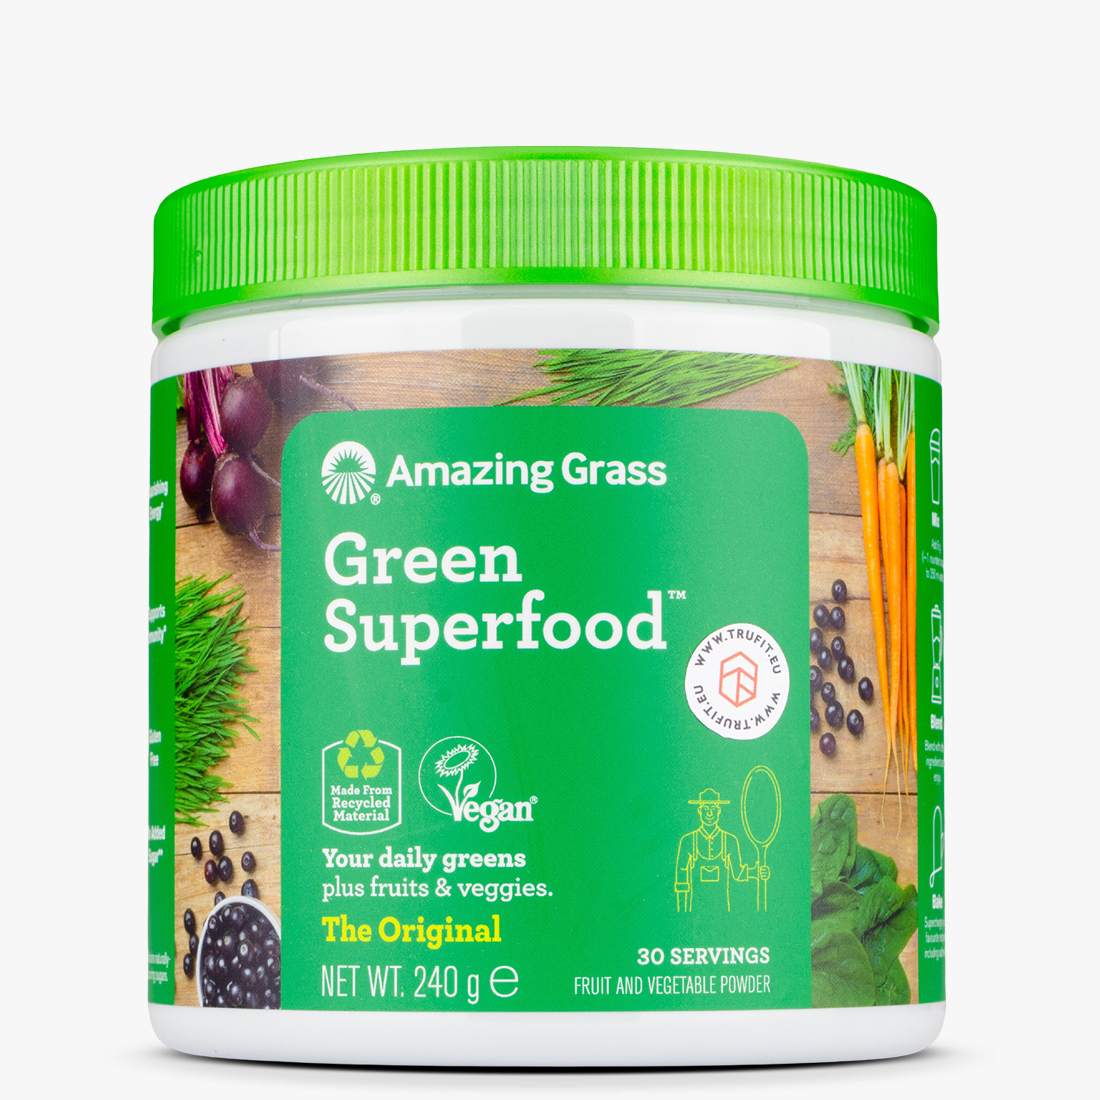 Amazing Grass - Green Superfood - Green superfood - TRU·FIT